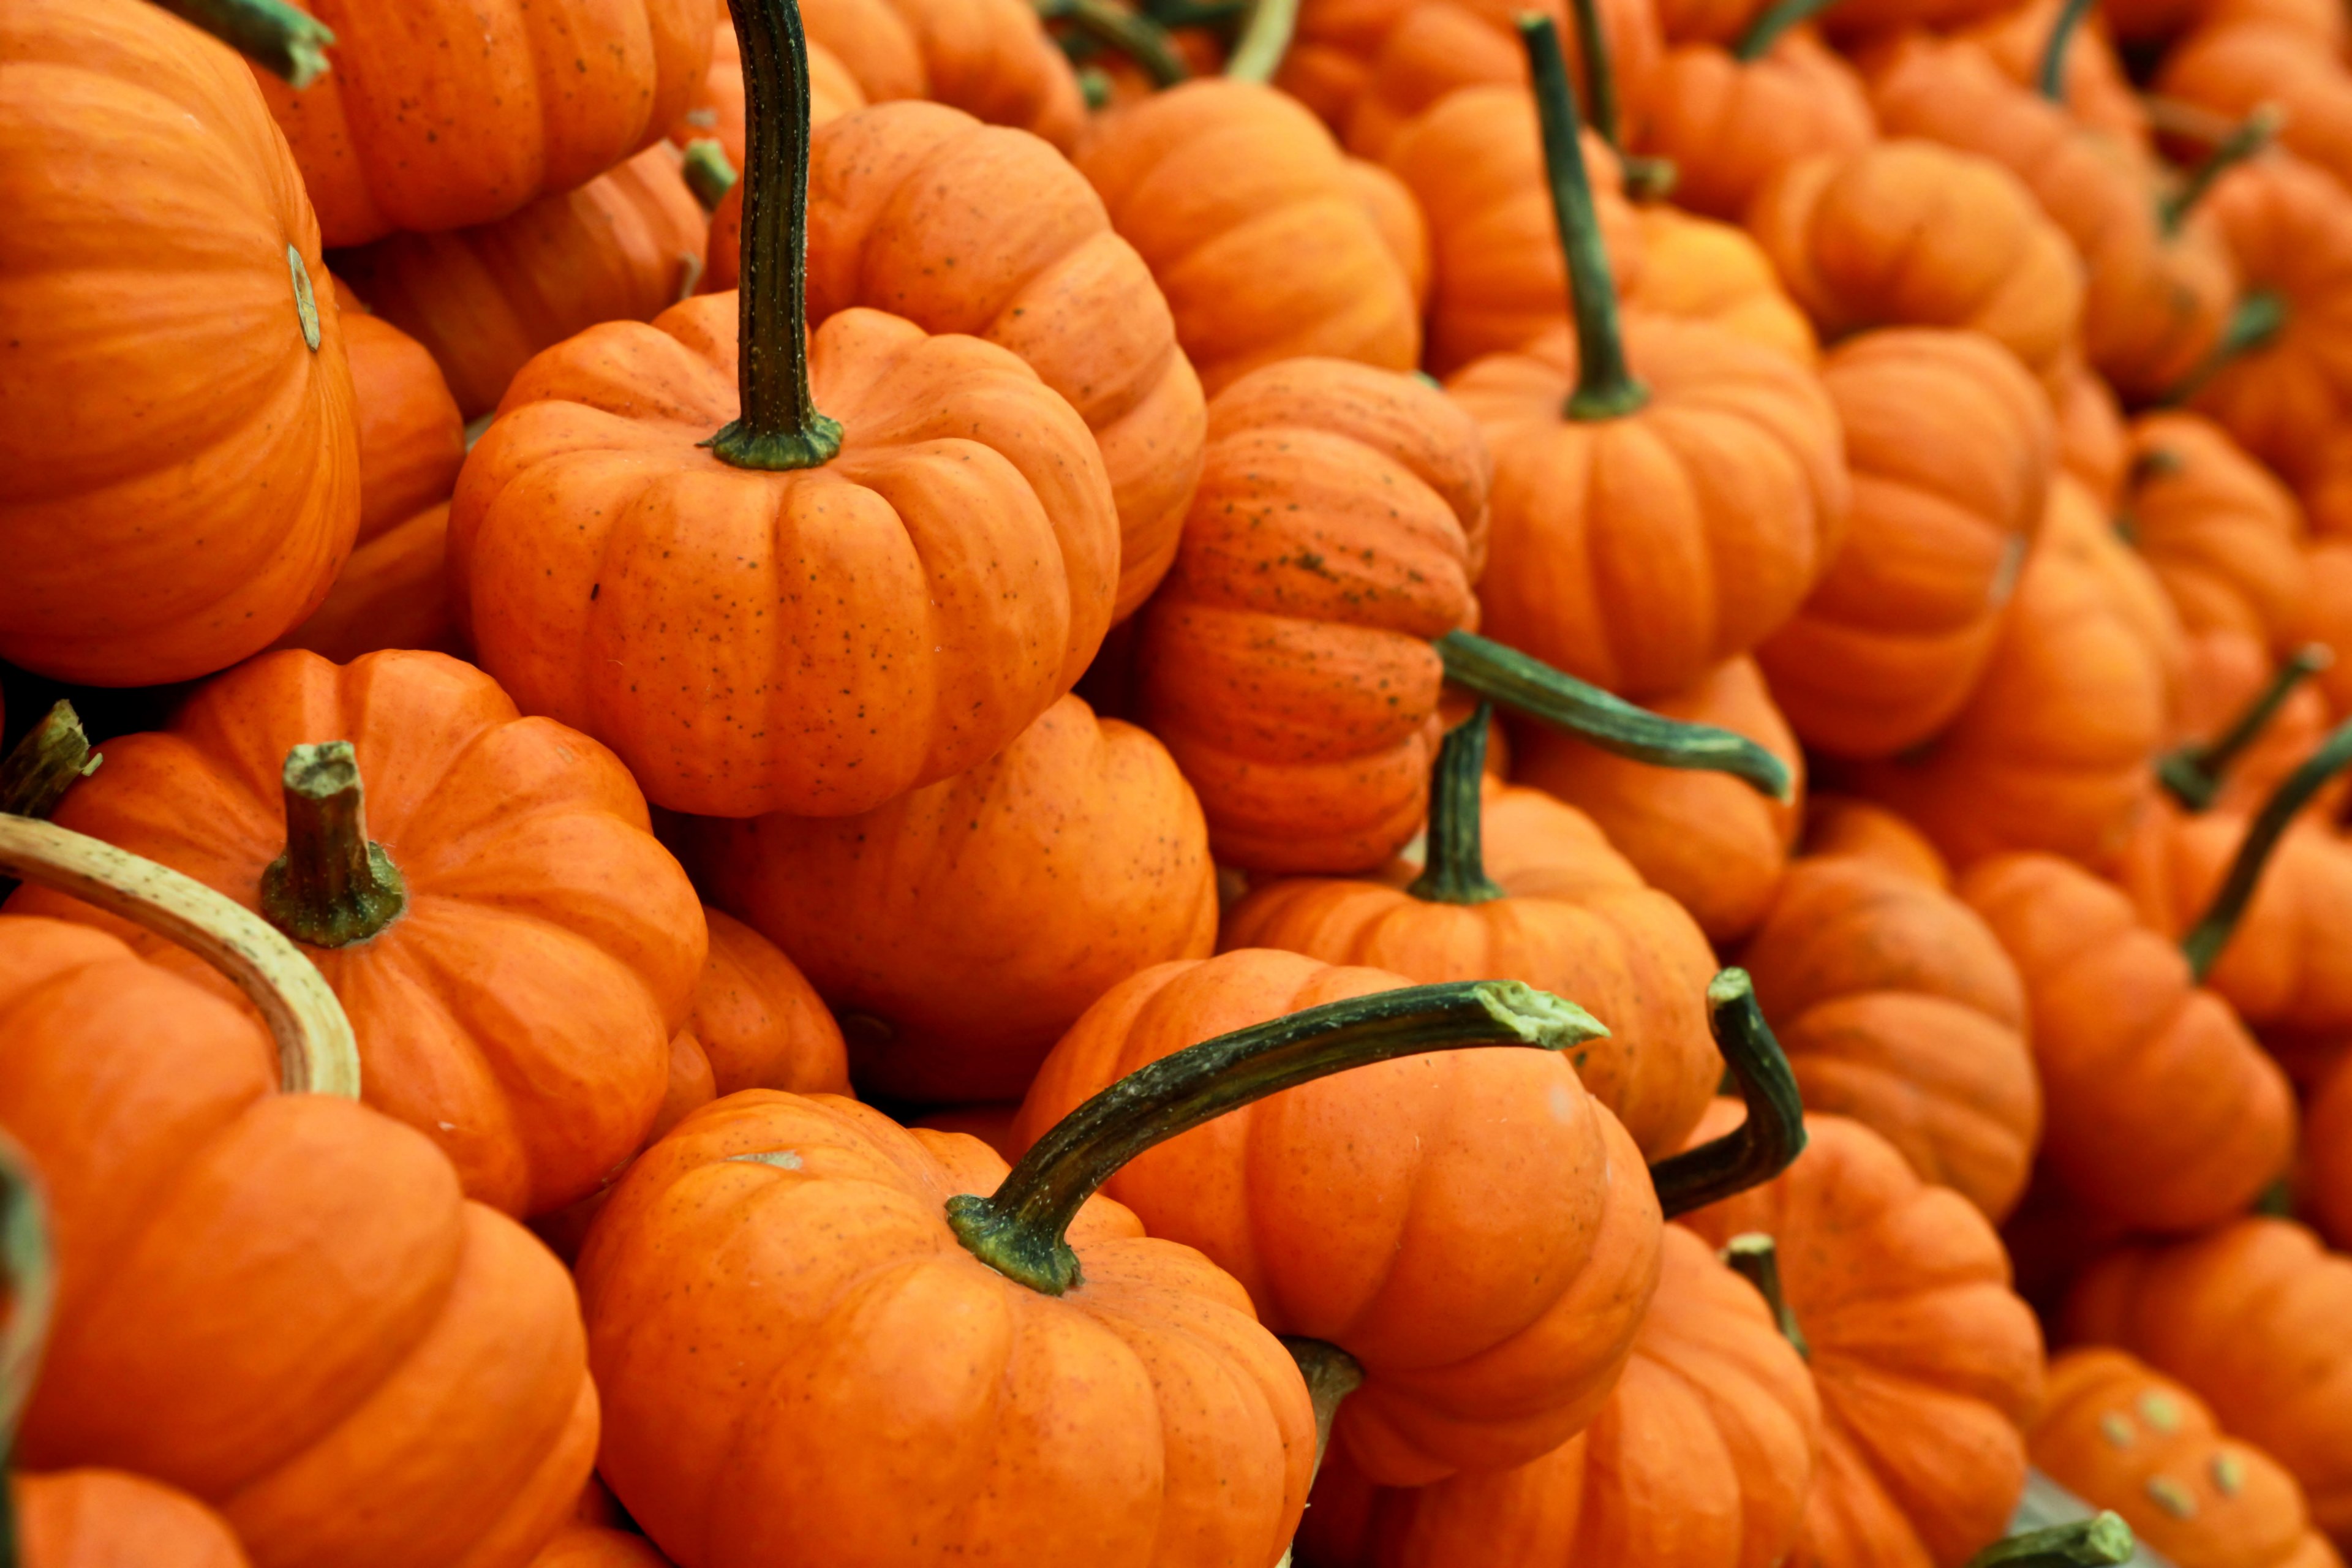 Wallpaper / stack of small orange pumpkins and gourds at an autumn market, halloween pumpkins 4k wallpaper free download